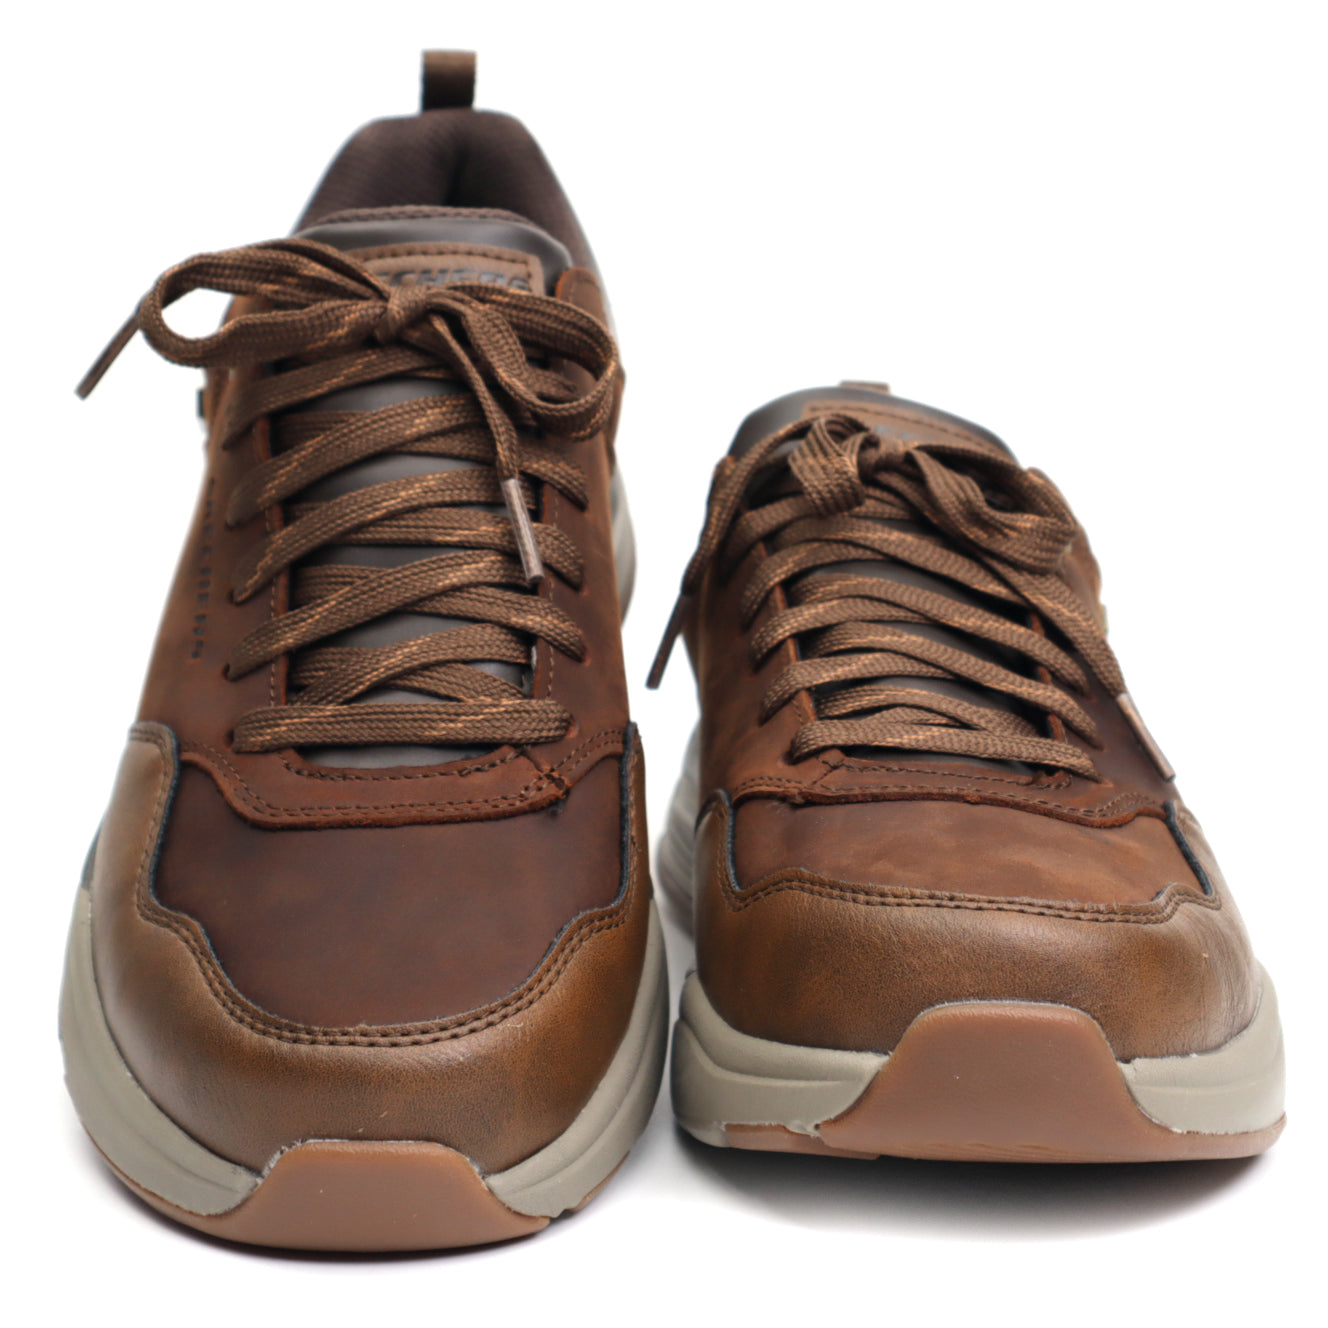 Skechers pantofi barbati watreproof 210021 Bengao Hombre maro IB2300-MARO